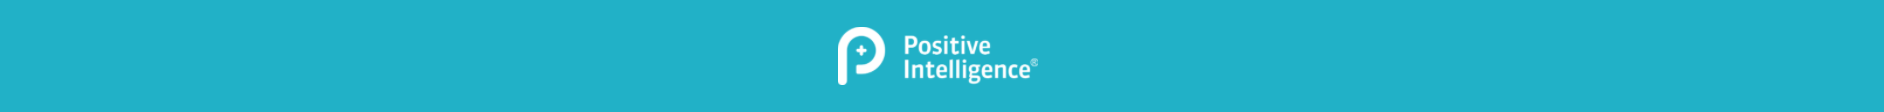 Positive Intelligence Mental Fitness Program